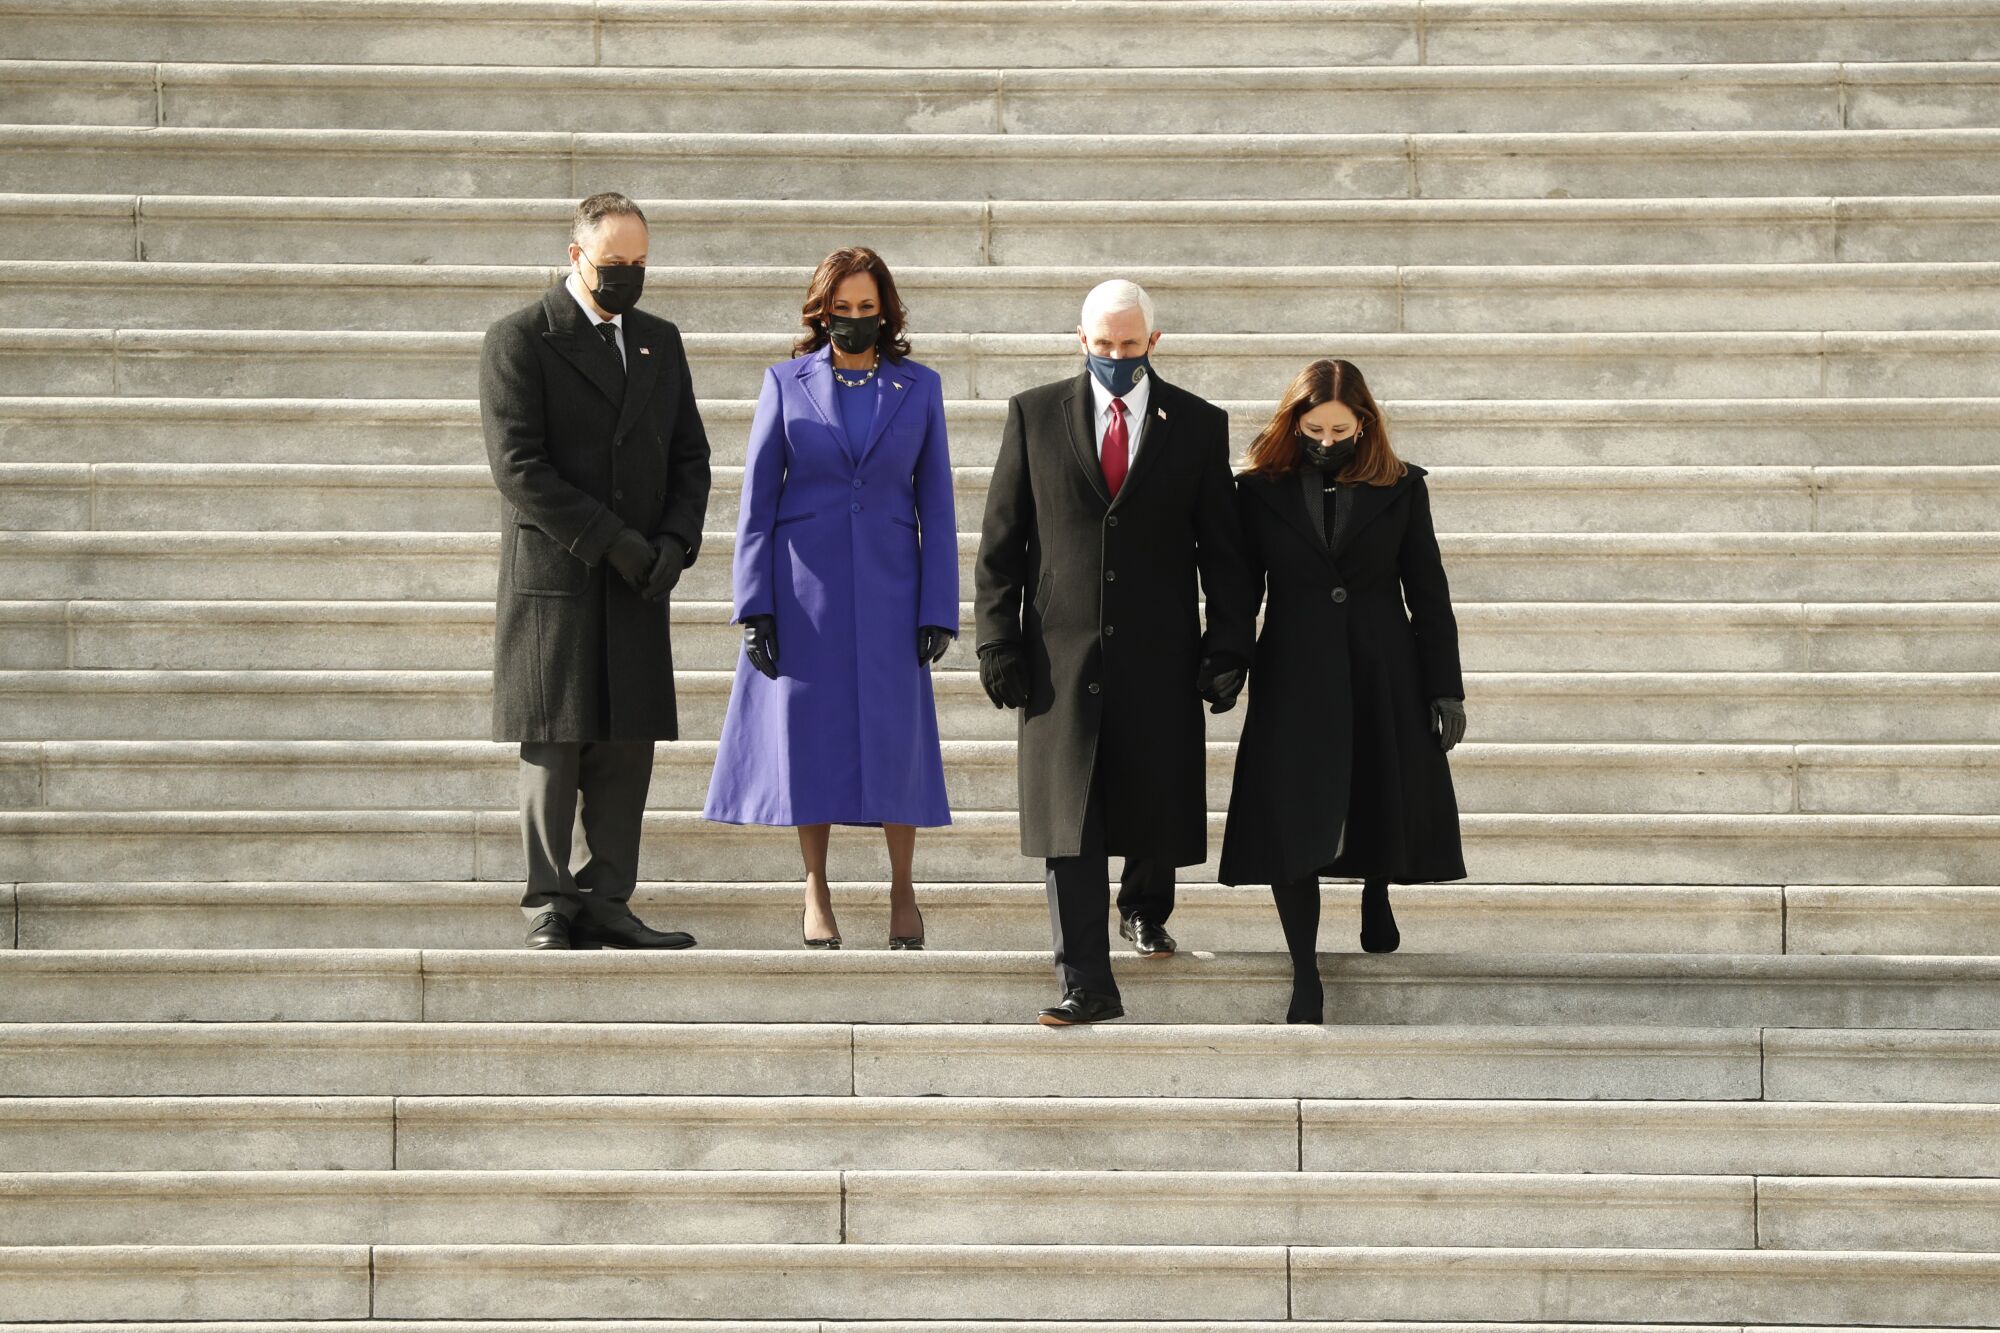 Kamala Harris and Doug Emhoff watch Mike Pence and his wife, Karen Pence, walk down steps.